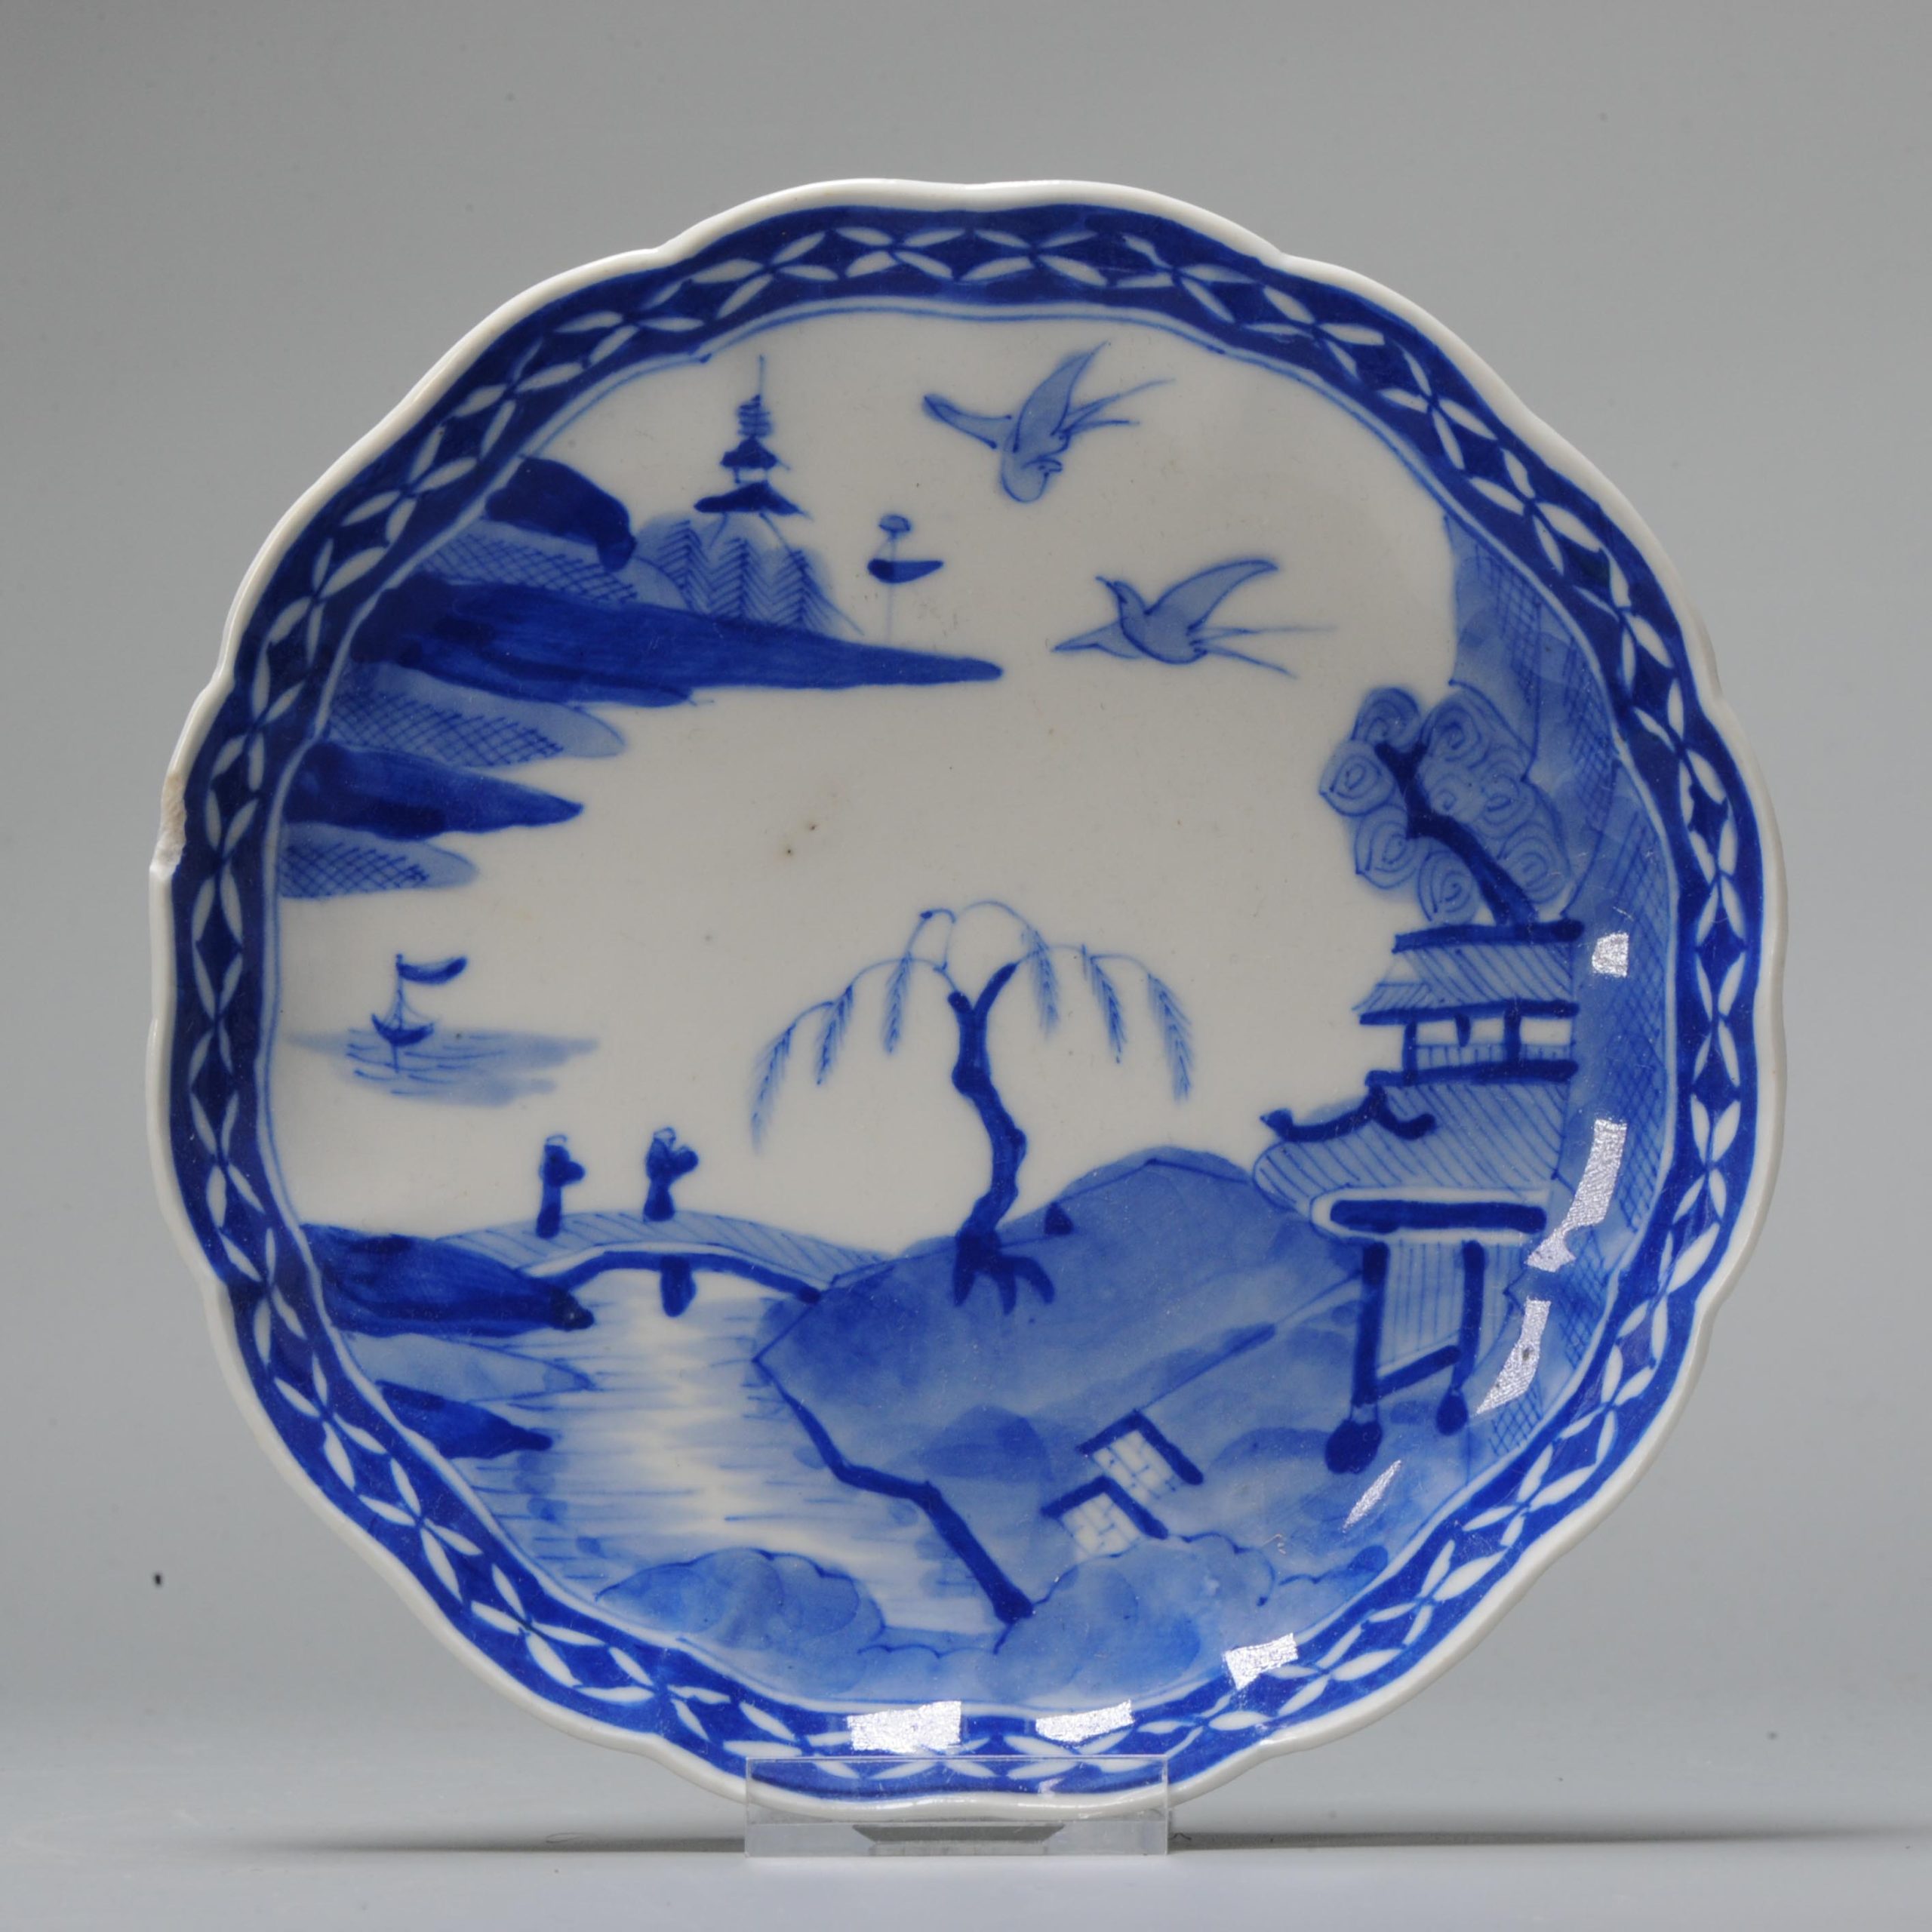 Antique Meiji/Taisho period Japanese Porcelain Kaiseki Dish Japan 19th/20th century